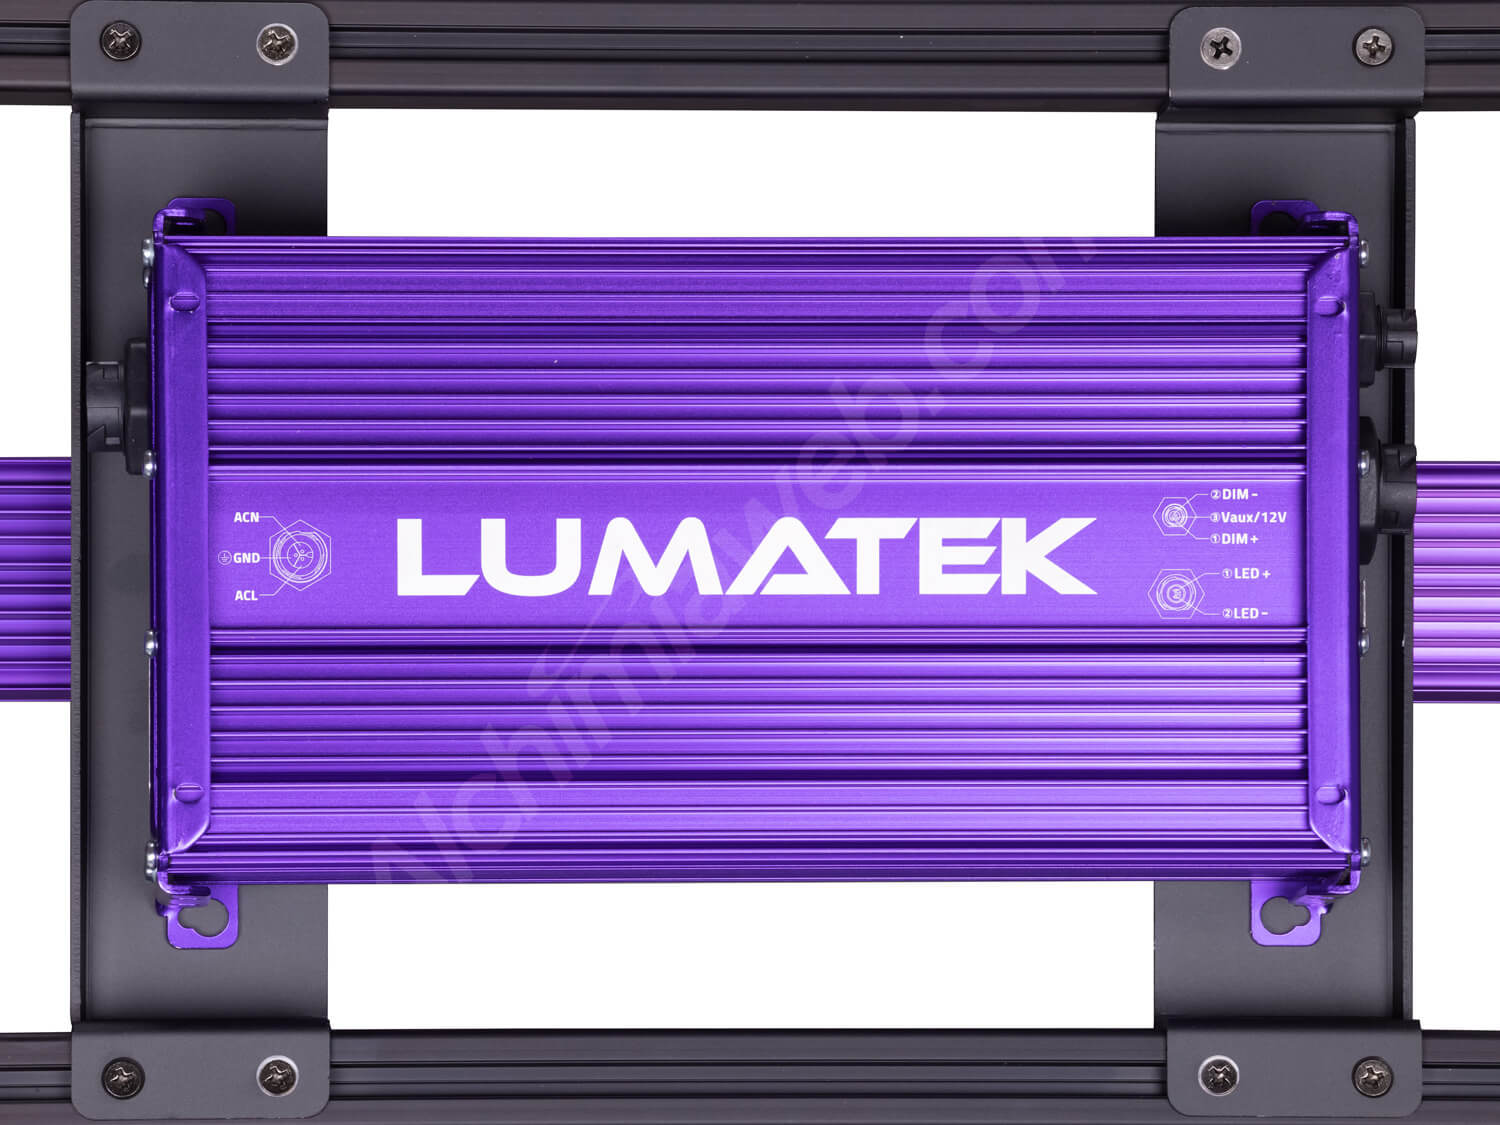 Sale of Lumatek Zeus 465w Pro 2.9